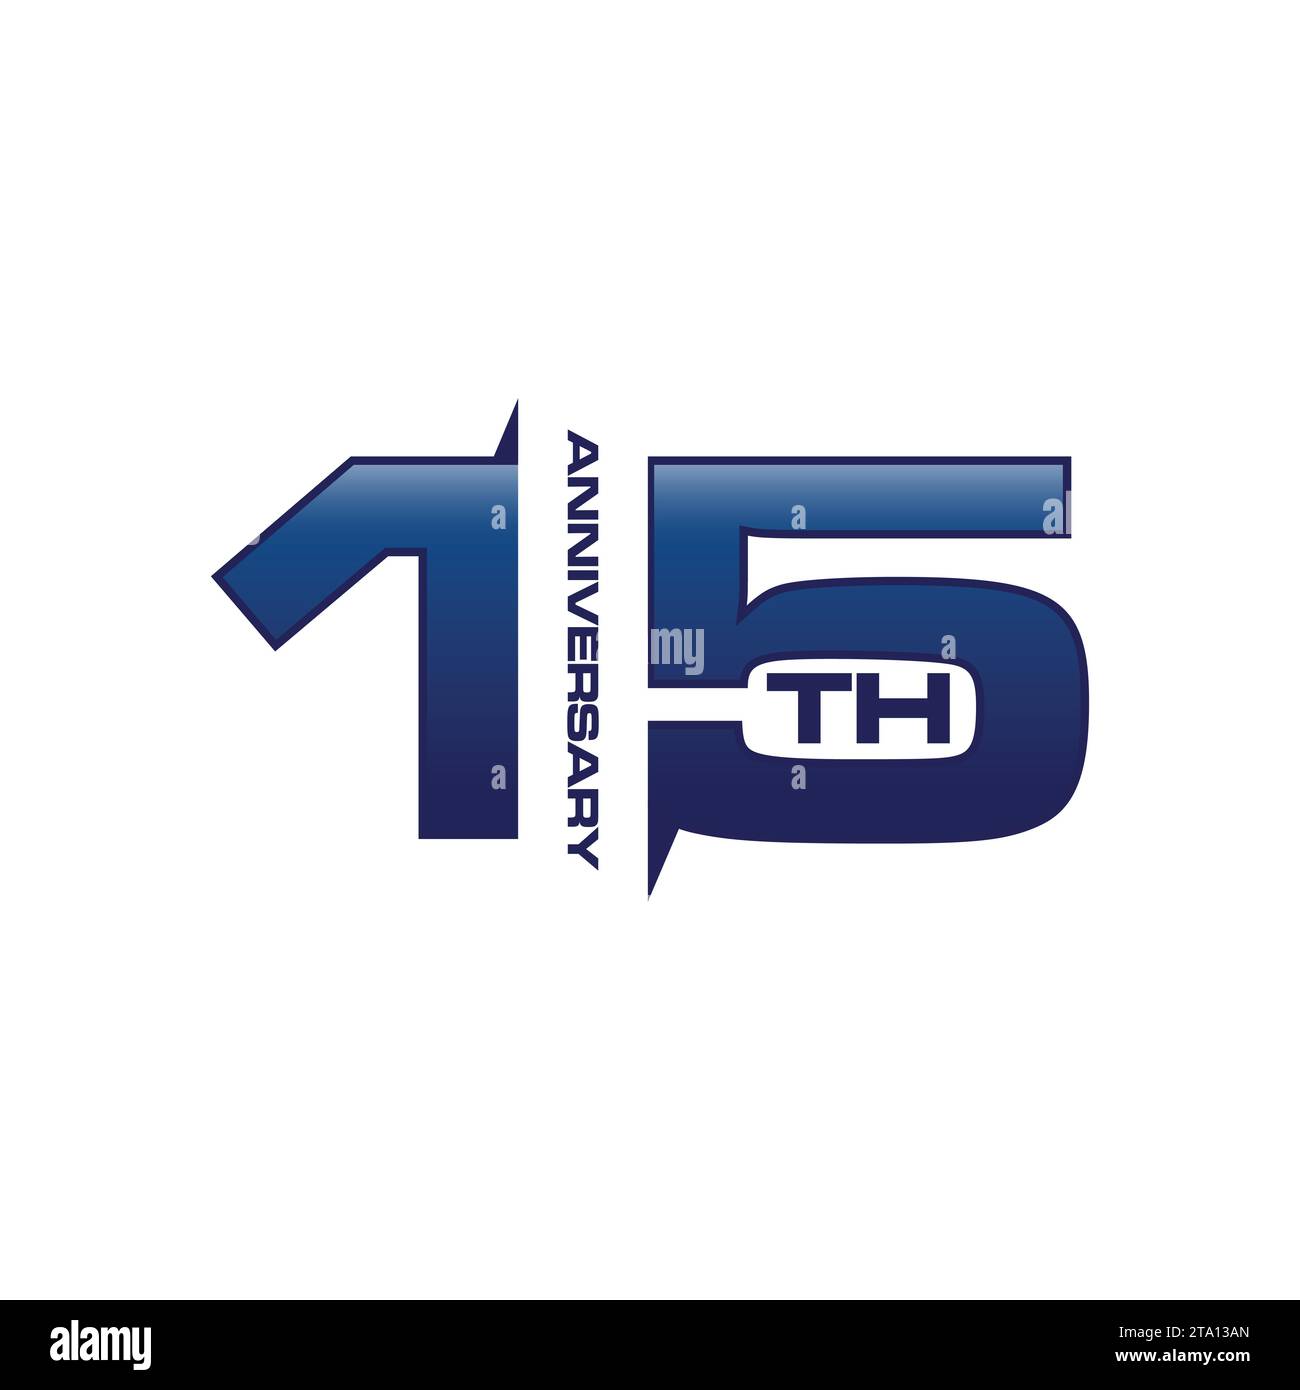 Logo modello logo del 15° anniversario logo.-illustrazione vettoriale. logo del 15° anniversario design perfetto del logo per festeggiare l'anniversario Illustrazione Vettoriale